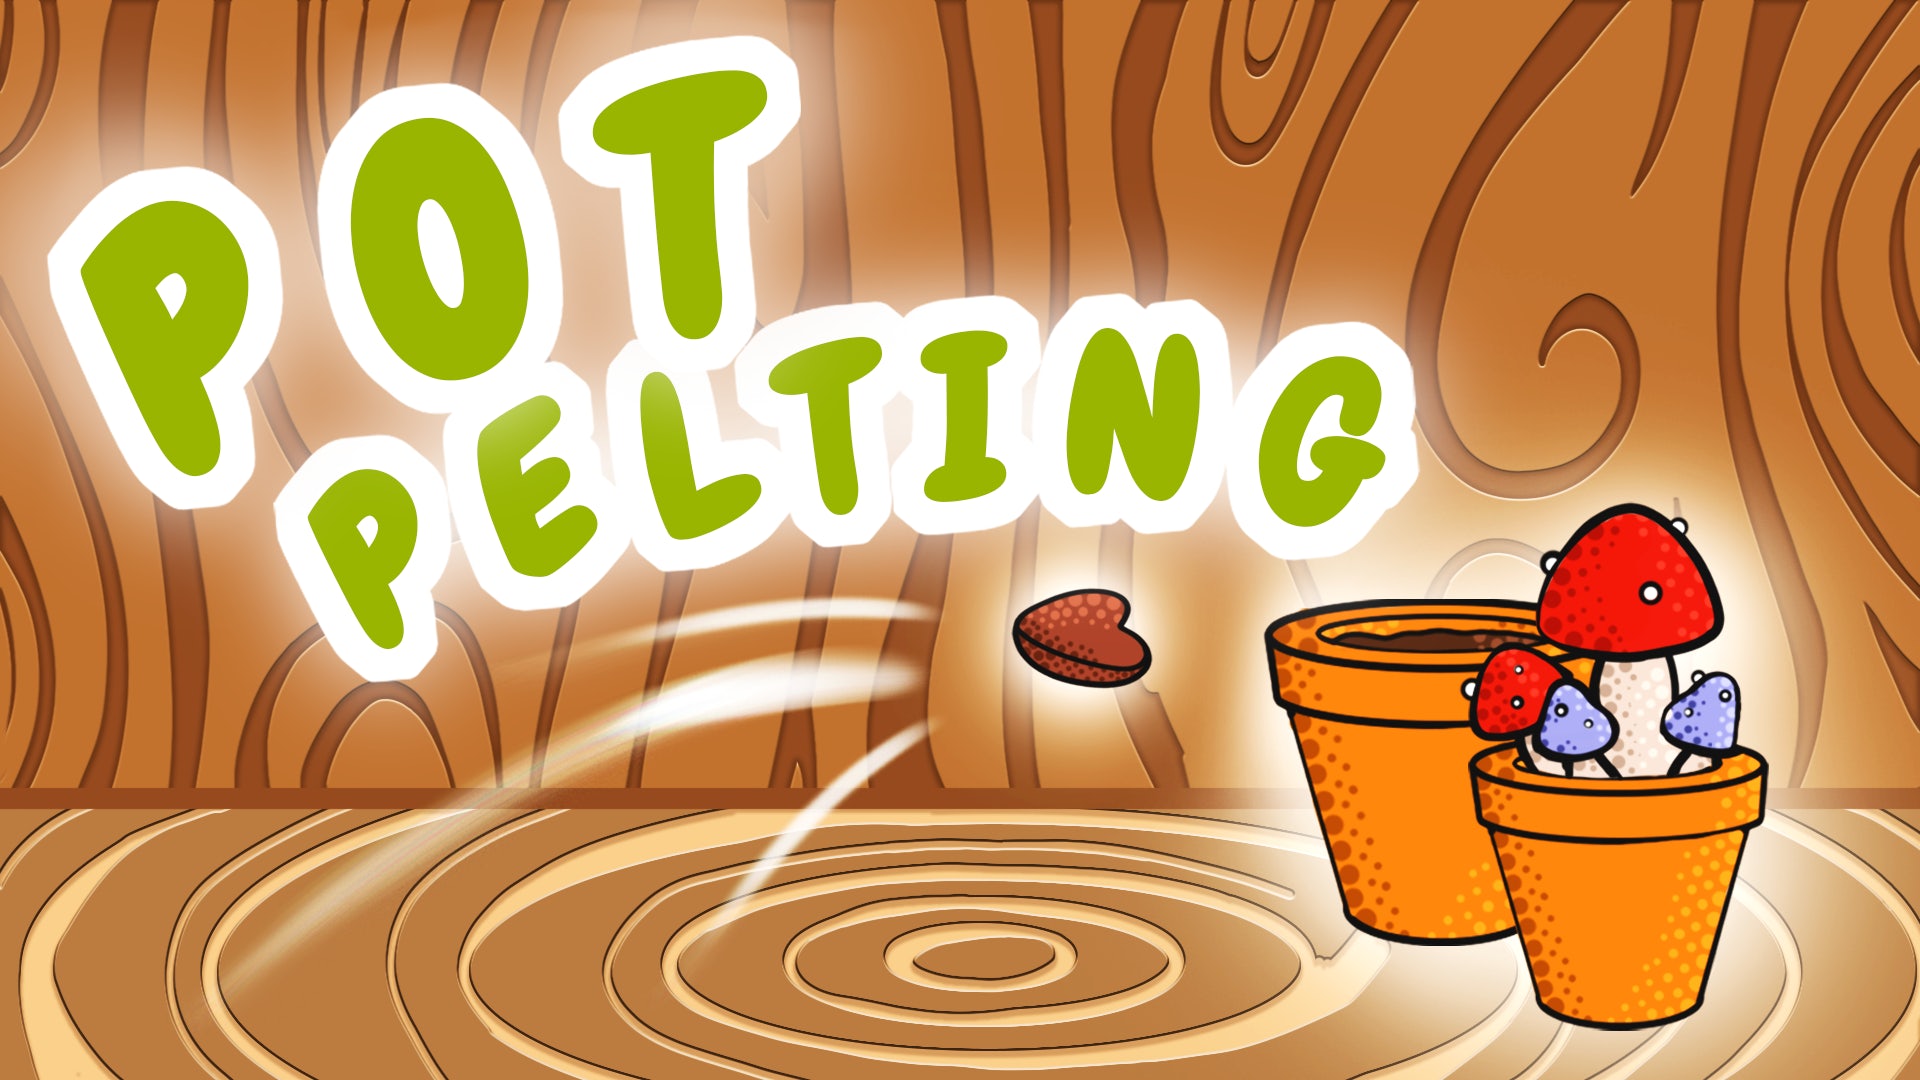 Pot Pelting